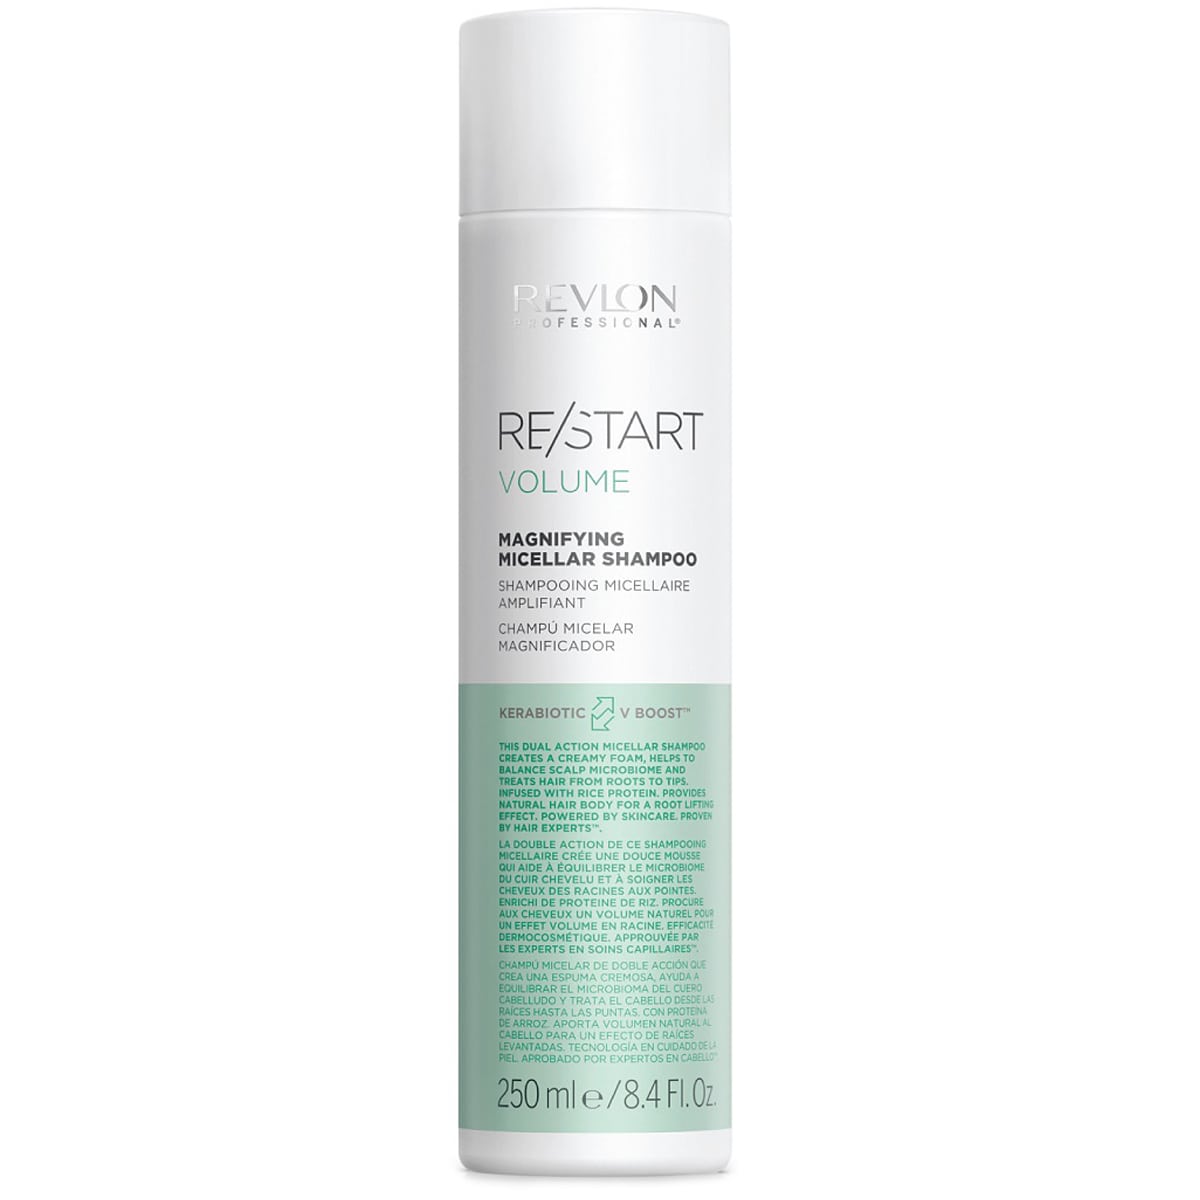 Revlon Professional Magnifying Micellar Shampoo Мицеллярный шампунь для тонких волос, 250 мл (Revlon Professional, Restart)